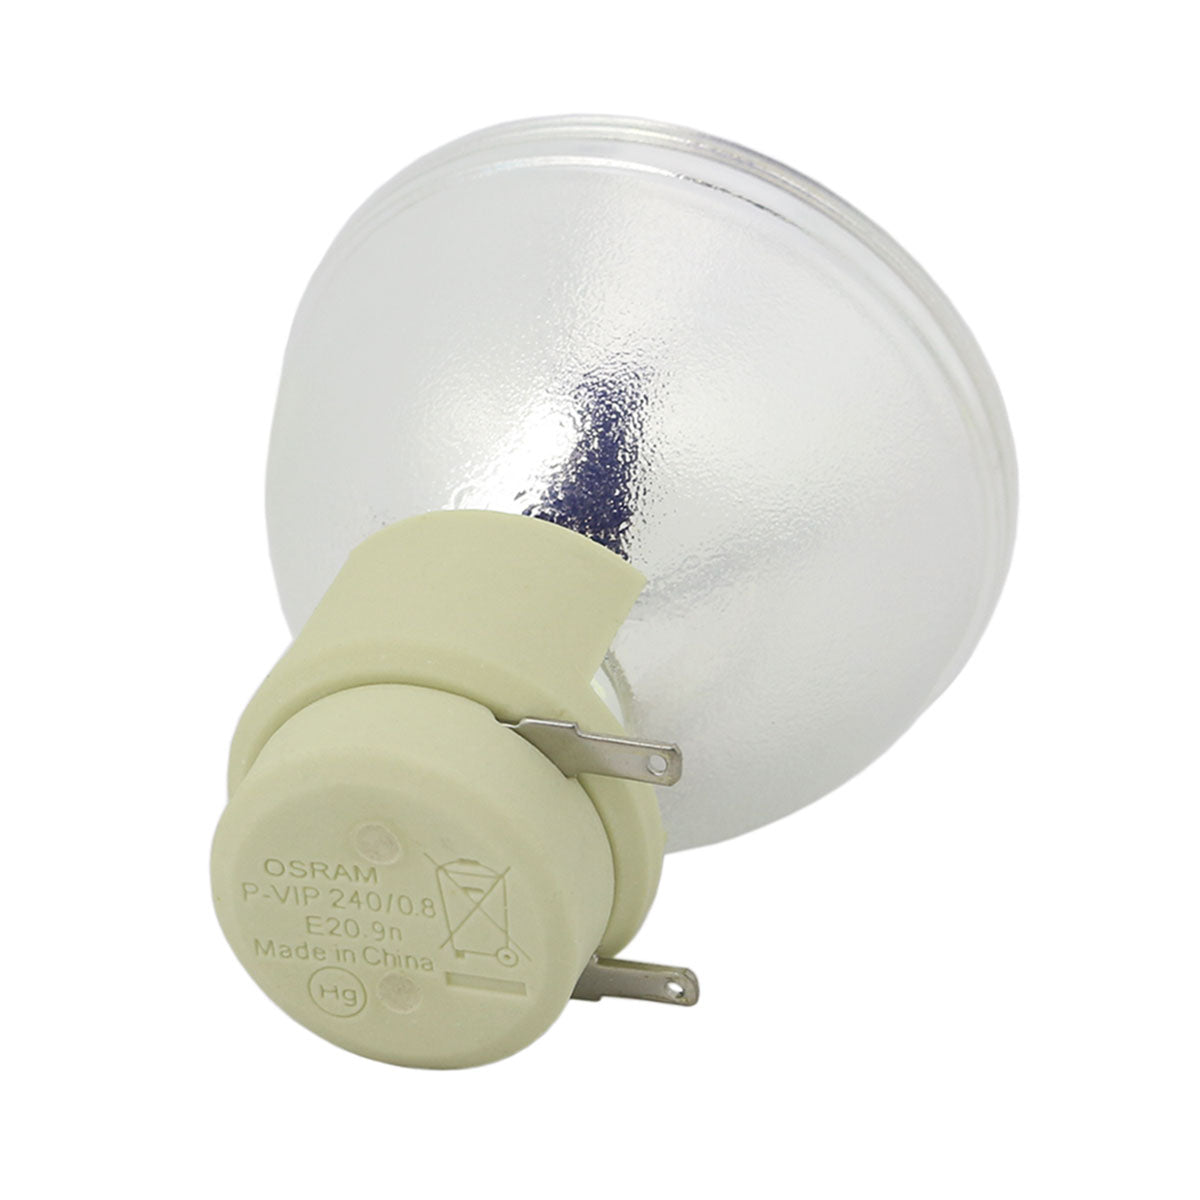 Viewsonic RLC-105 Osram Projector Bare Lamp